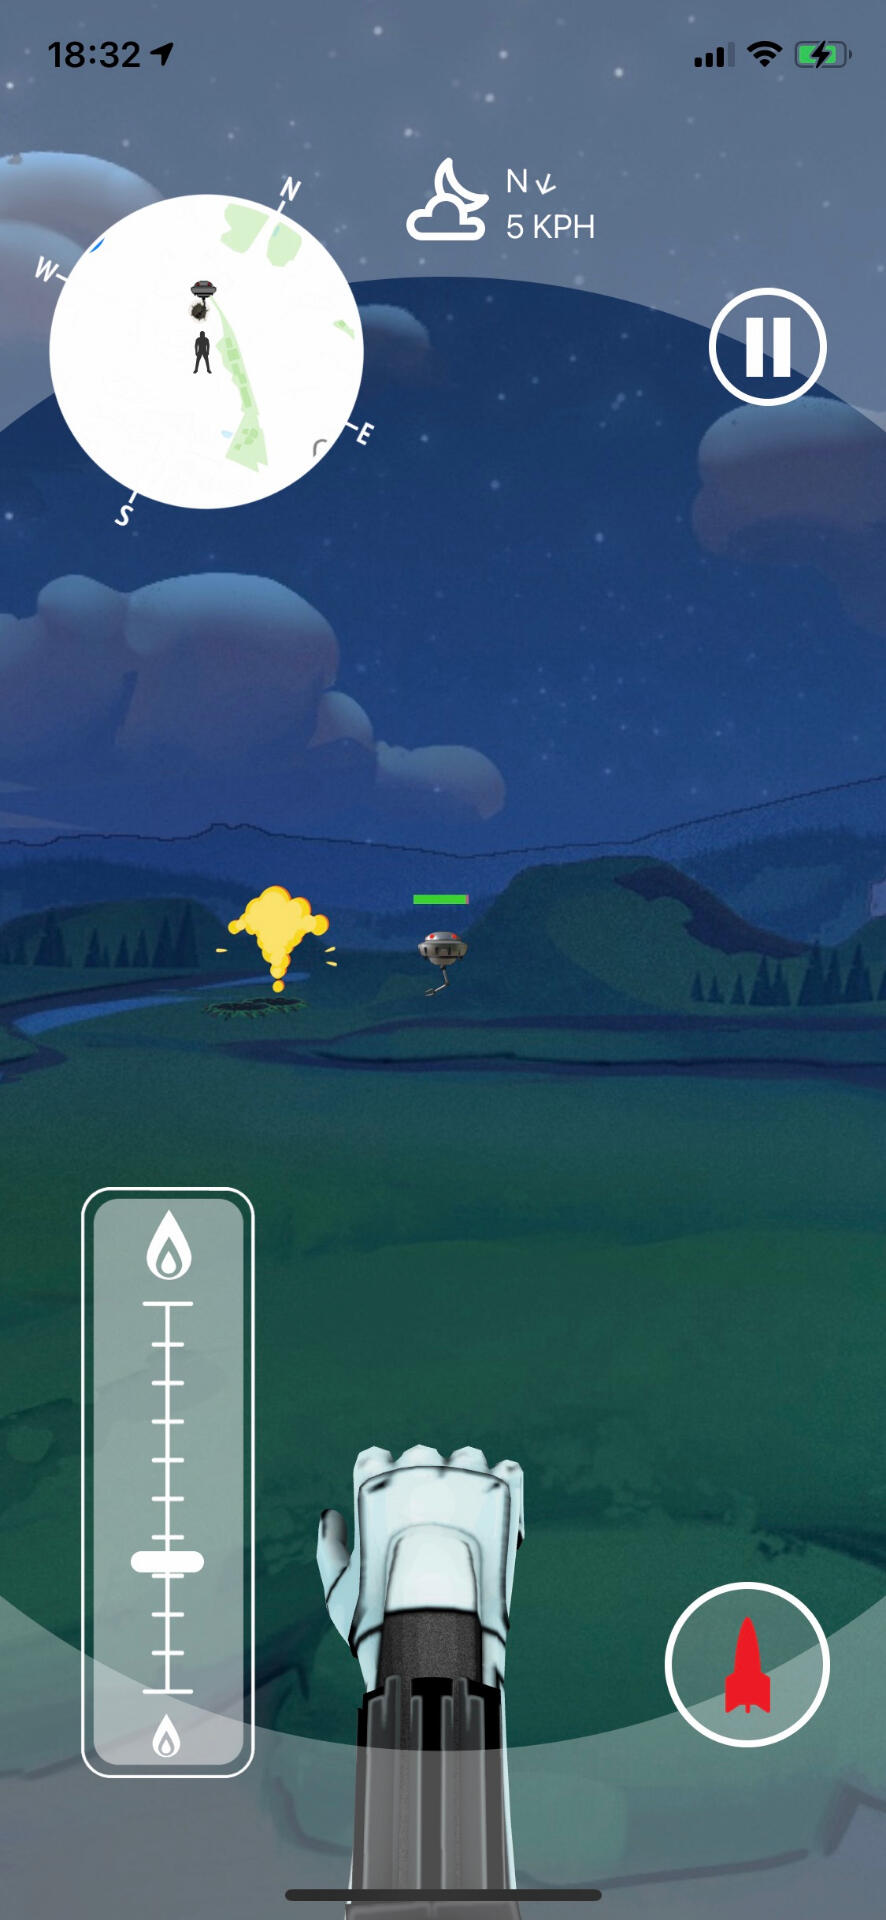 A screenshot of gameplay